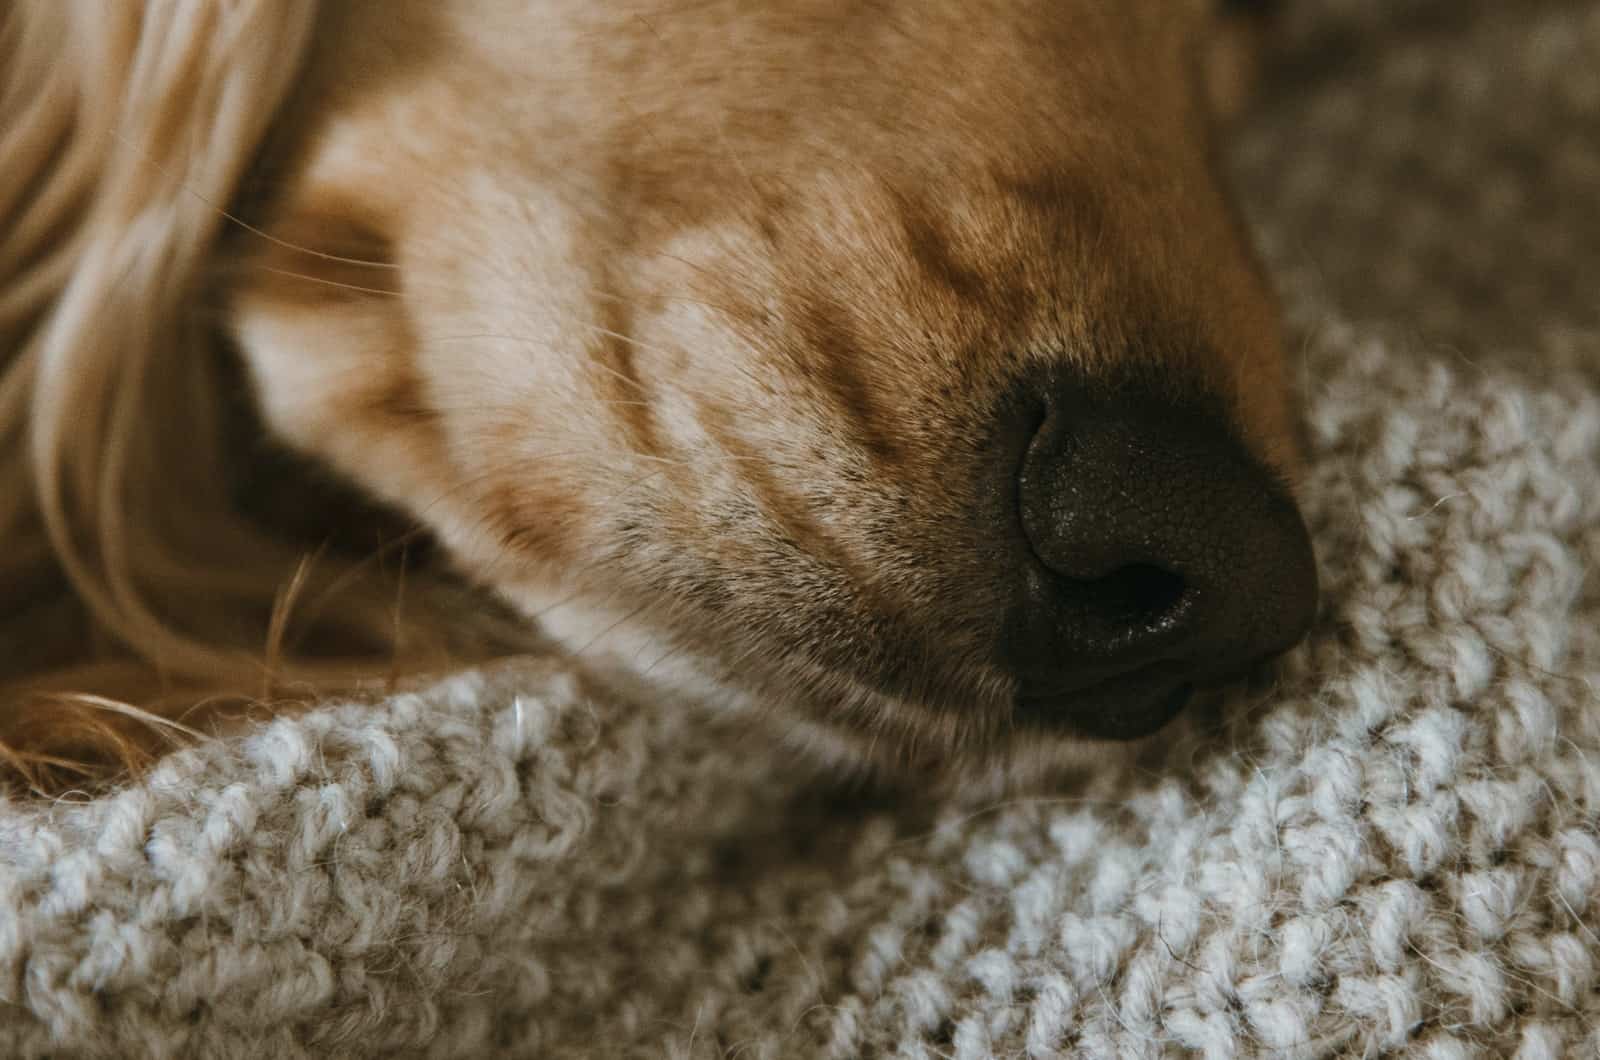 dog nose close-up